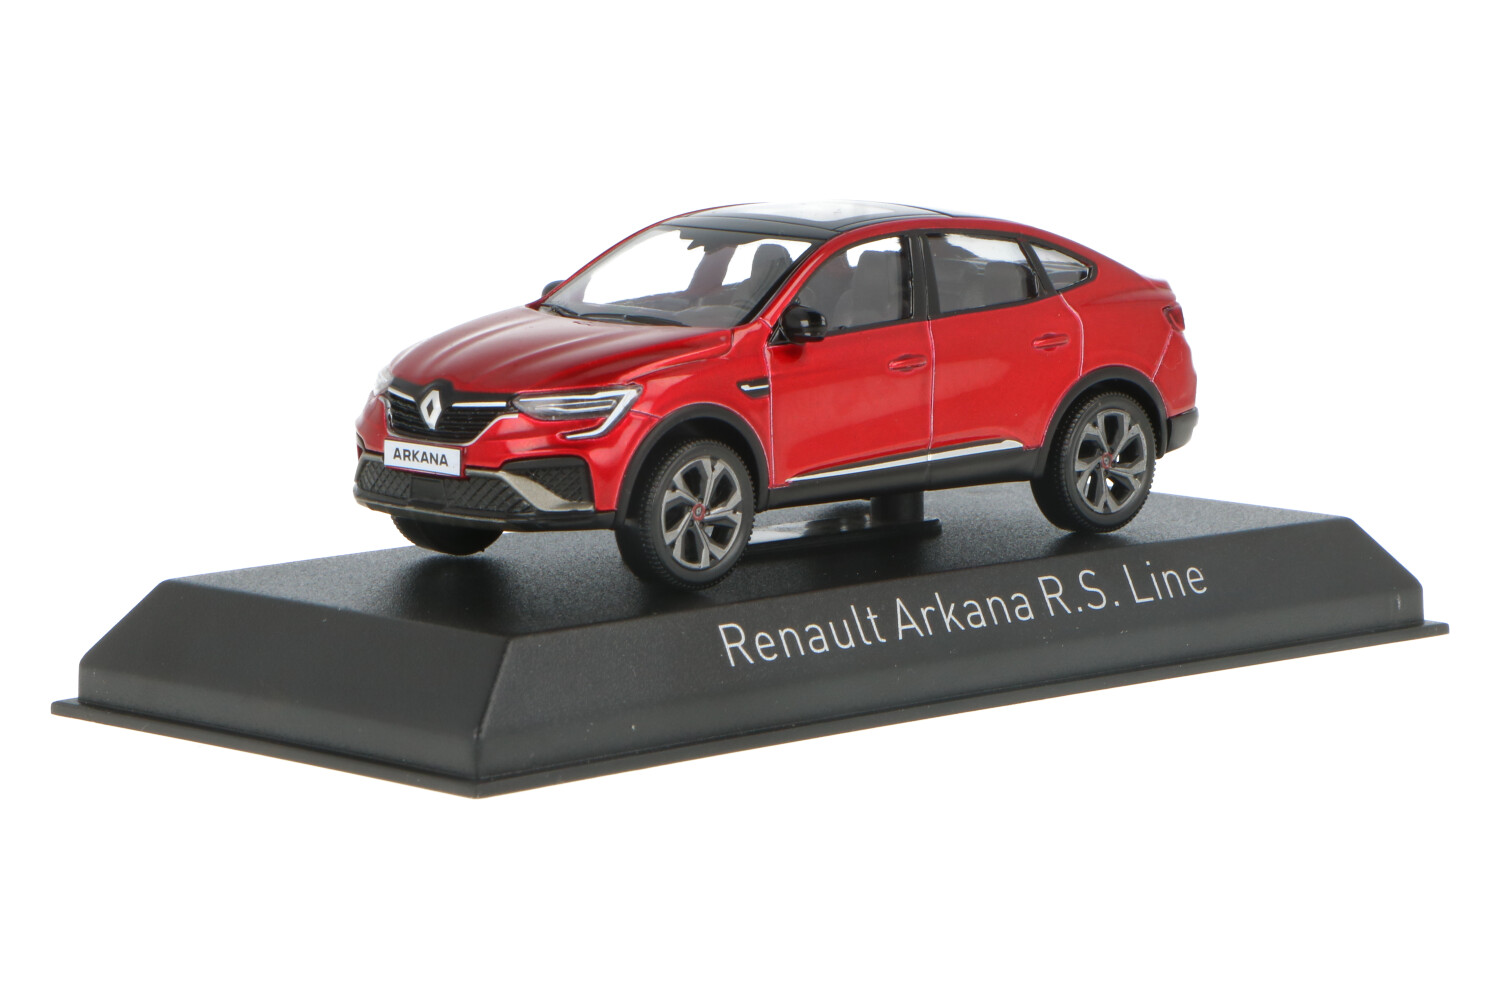 Renault-Arkana-R.S.-Line-517683_13153551095176837Renault-Arkana-R.S.-Line-517683_Houseofmodelcars_.jpg